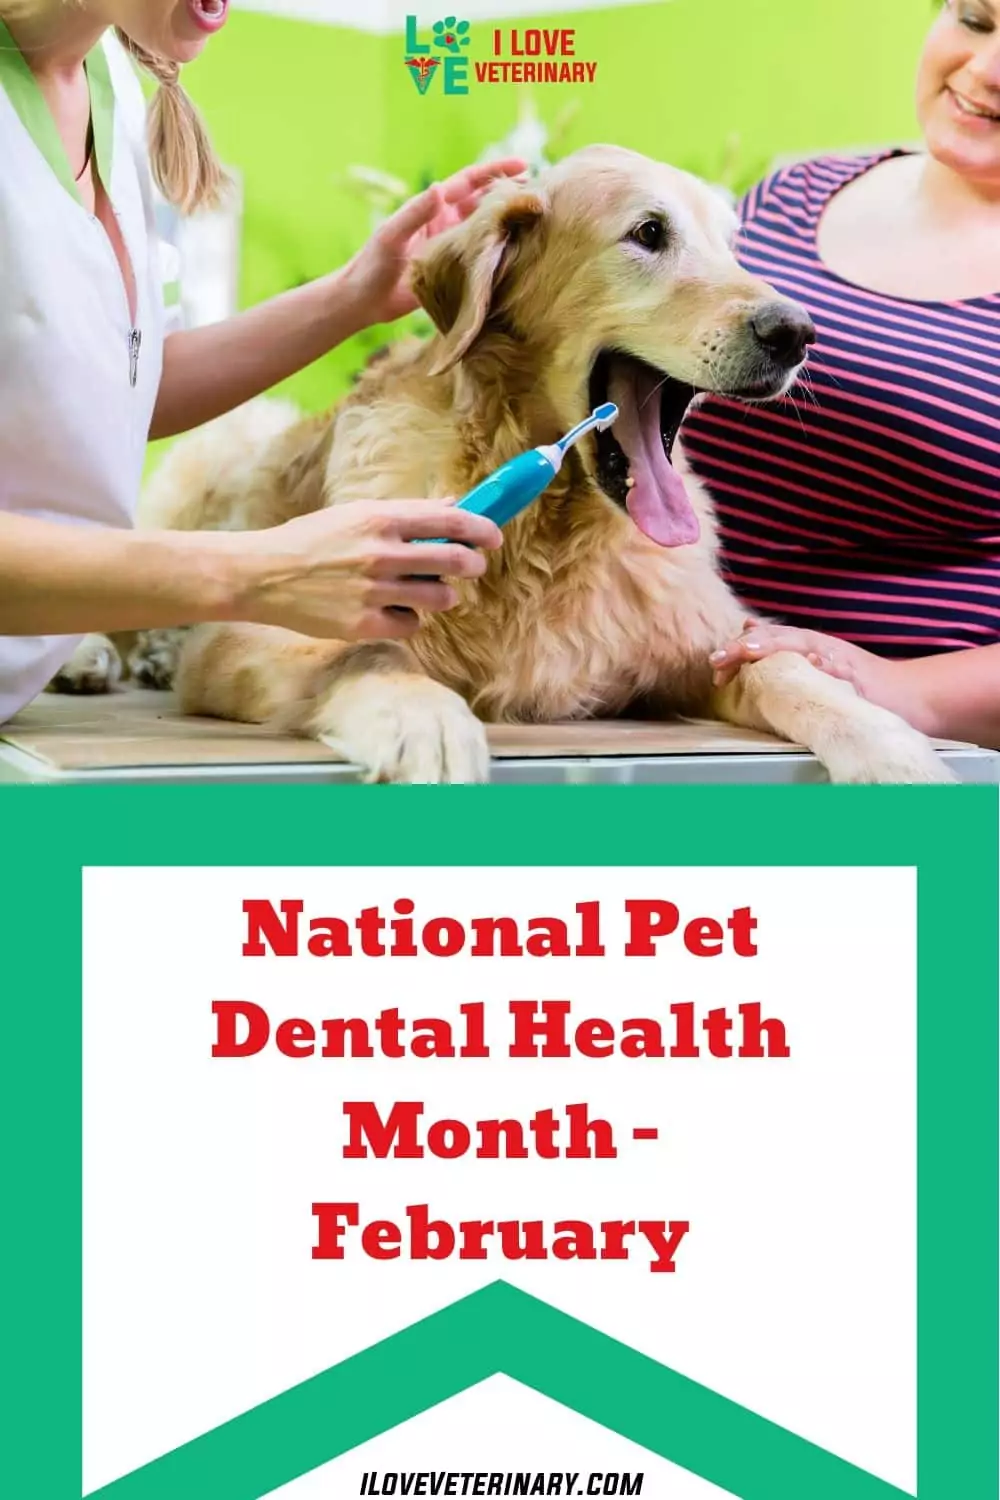 national pet dental health month February. I Love veterinary